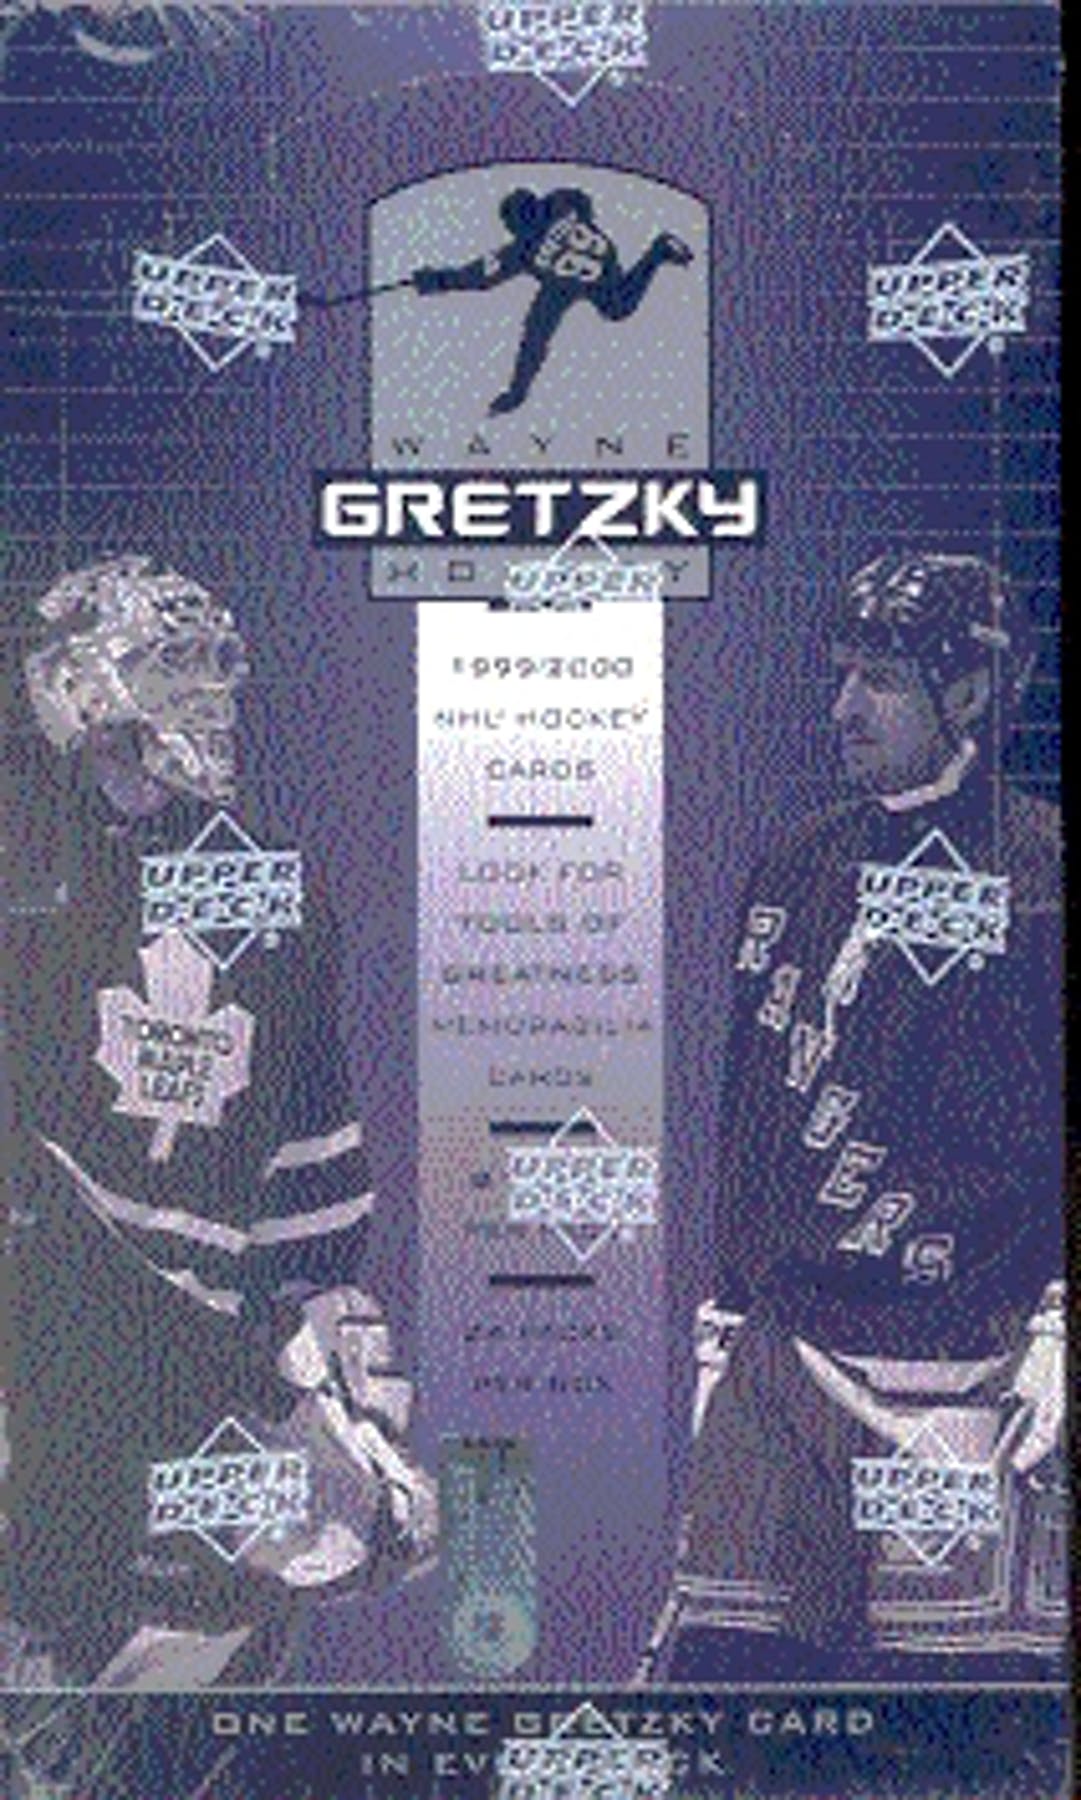 1999-00 Upper Deck Wayne Gretzky Hockey # 179 Mint Hockey Card Wayne Gretzky New York Rangers Checklist # 1